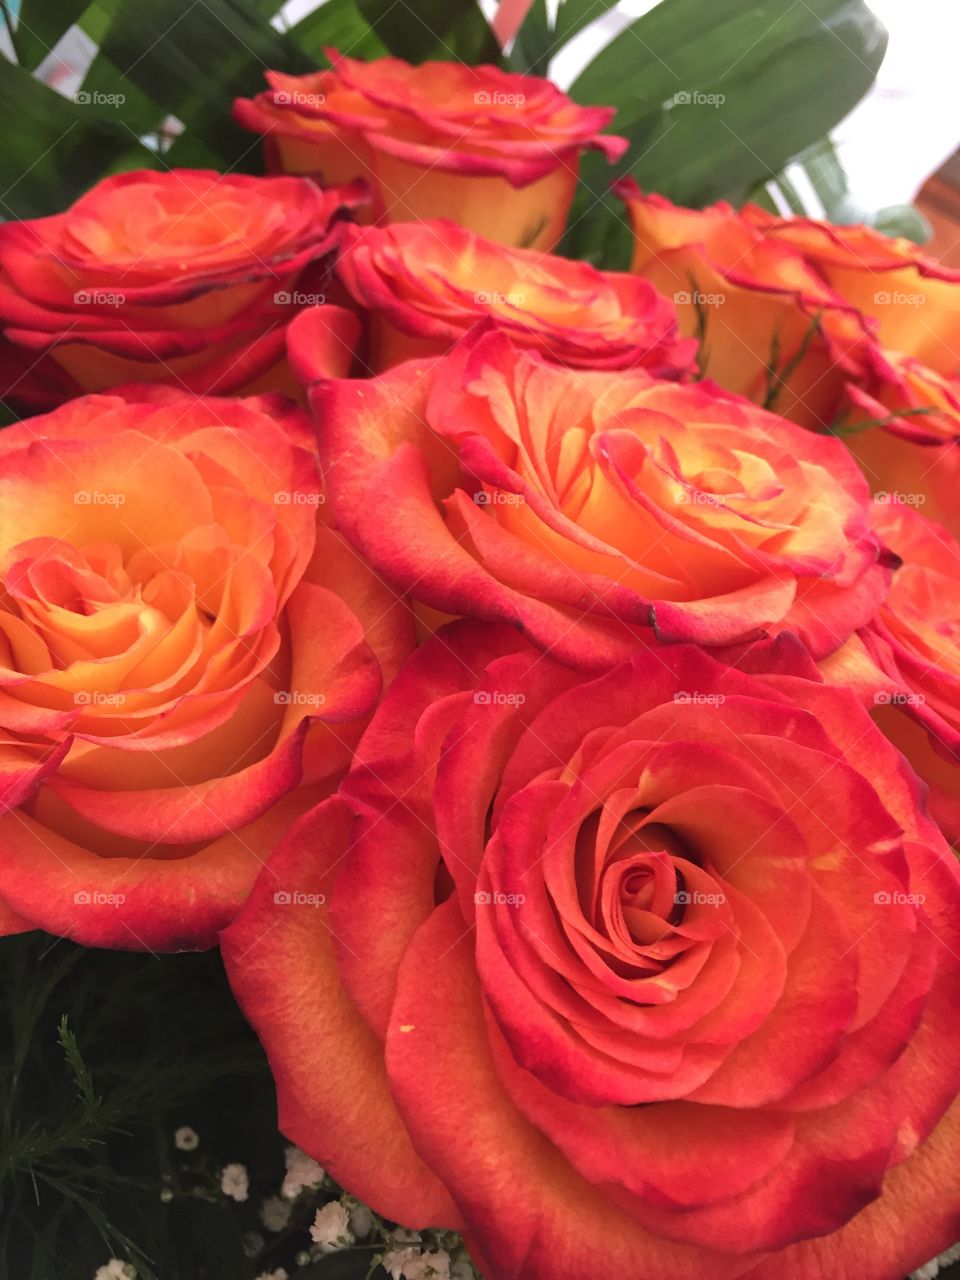 Roses for Jeanne 